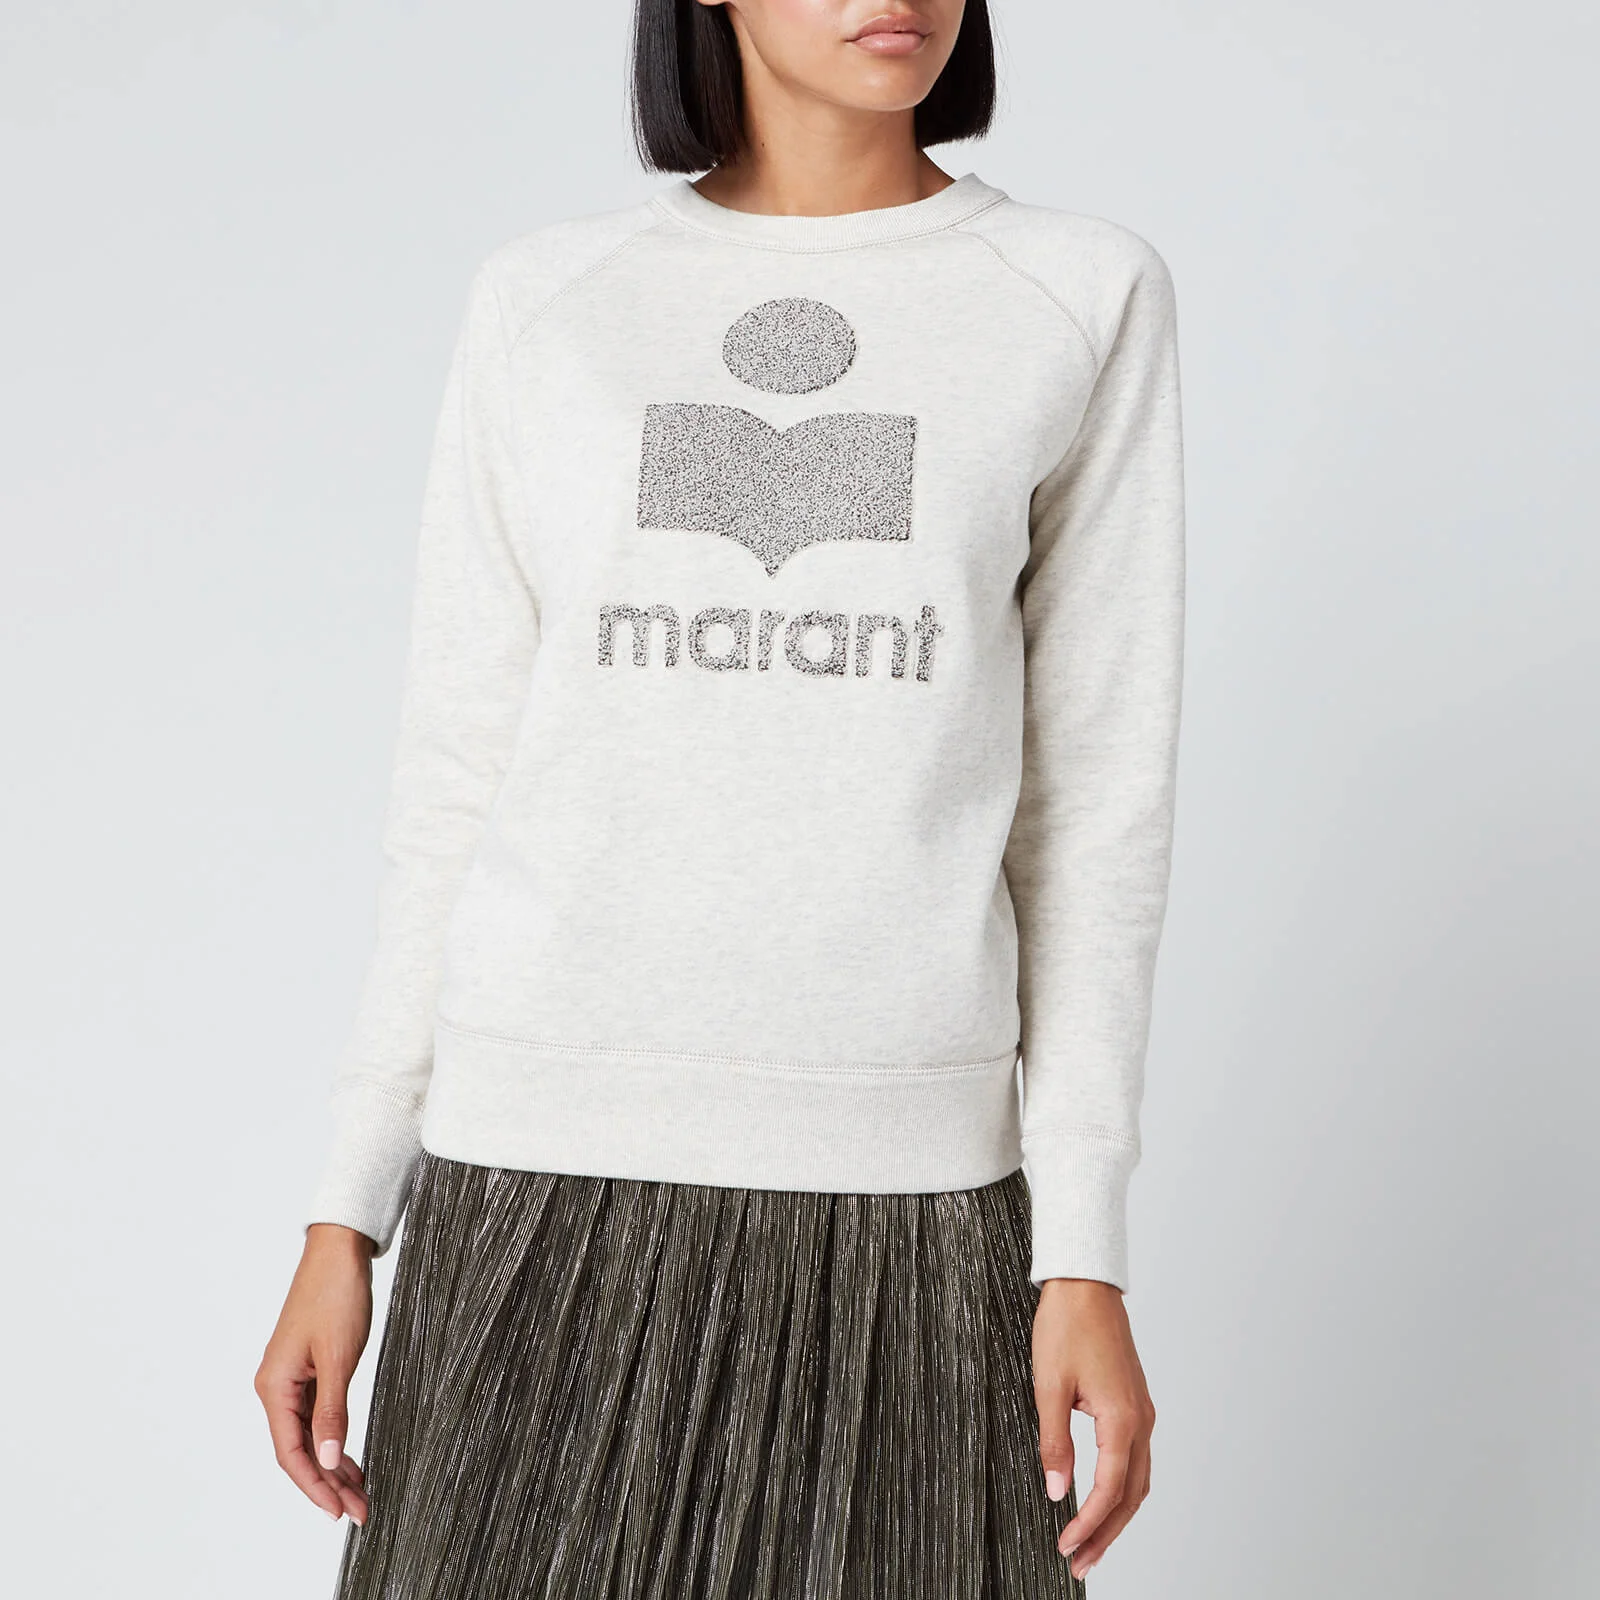 Marant Etoile Women's Milly Sweatshirt - Ecru Image 1